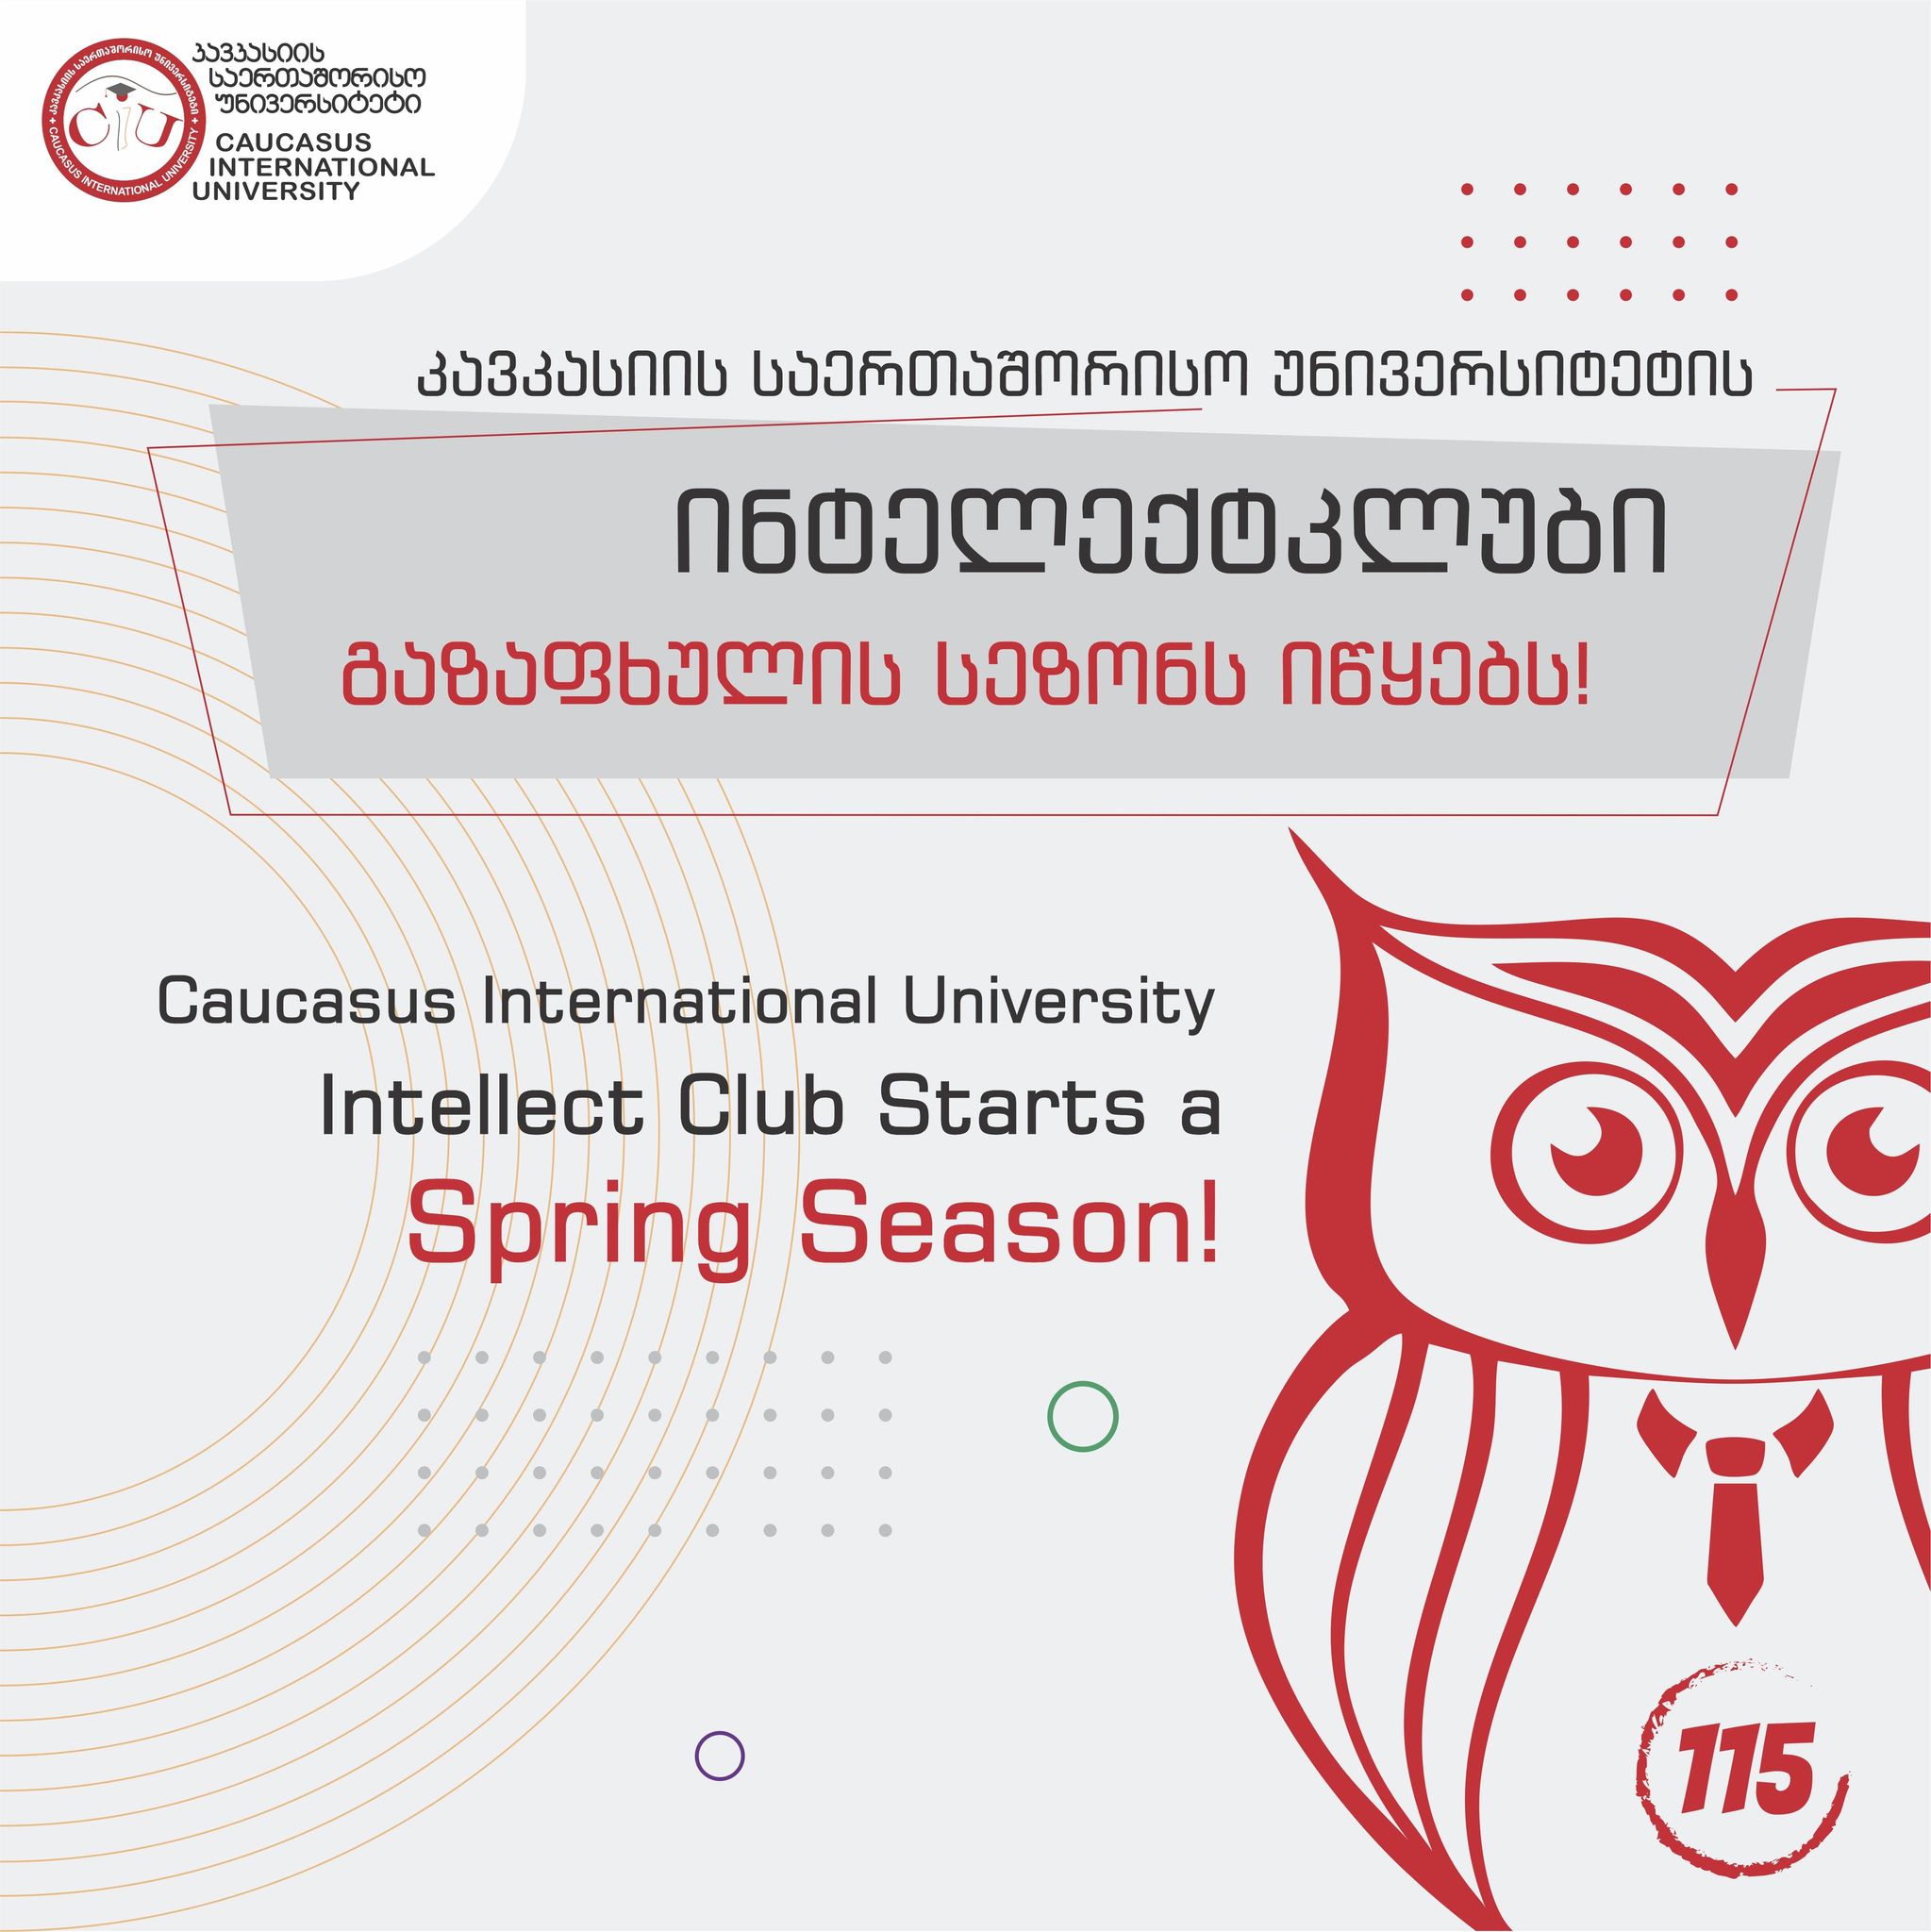 CIU Intellect Club starts a new, Spring season!